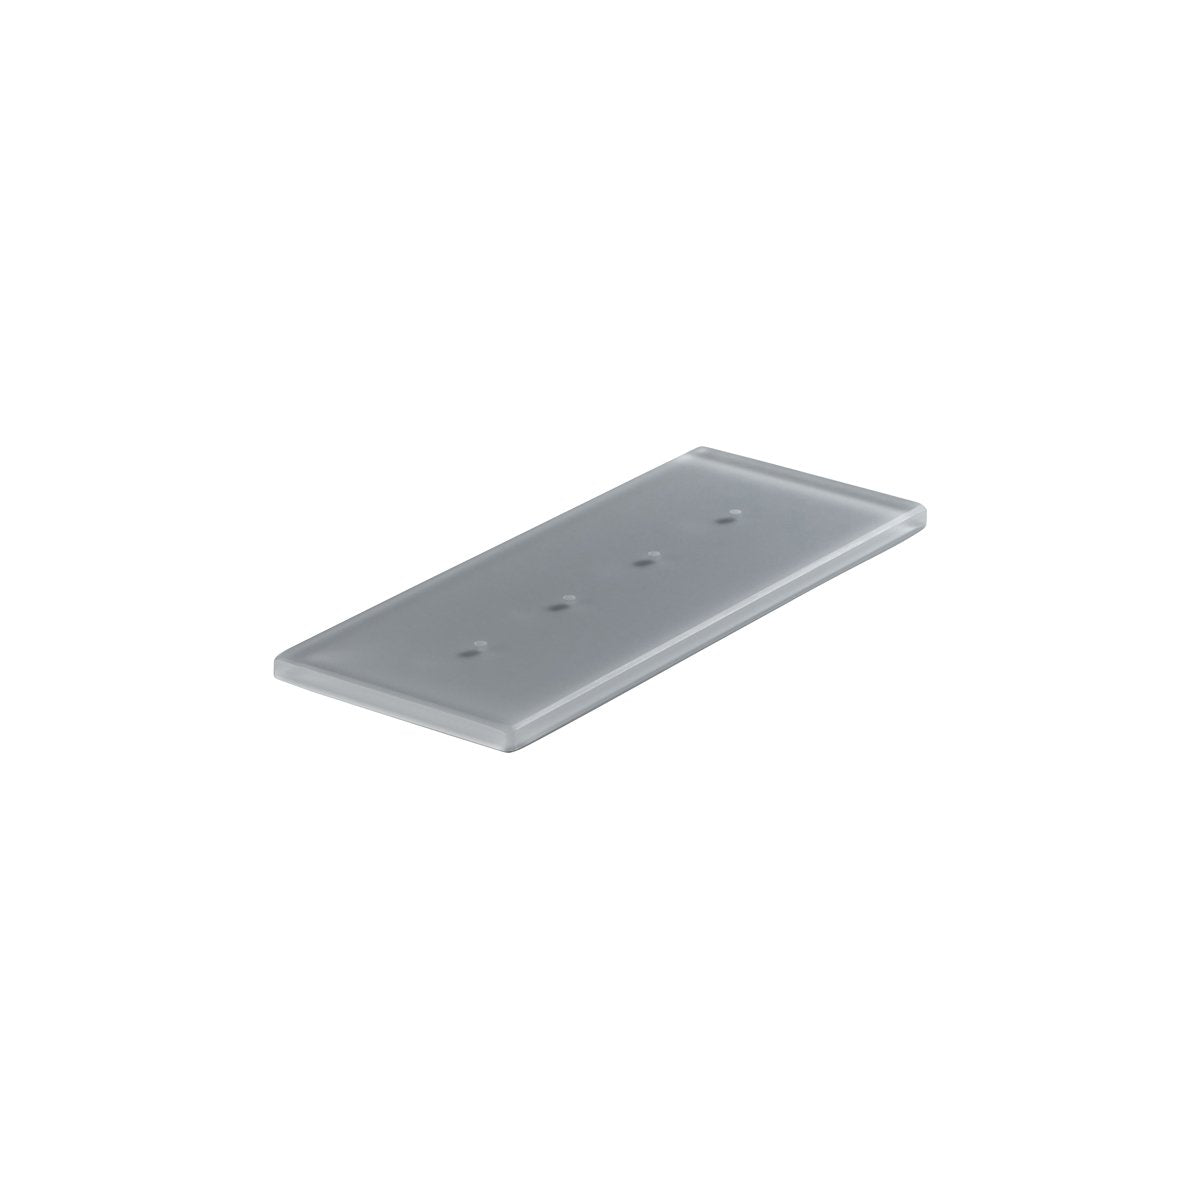 MLP112238 Mealplak Tray With 4 Holes Concrete 245x100x10mm Tomkin Australia Hospitality Supplies